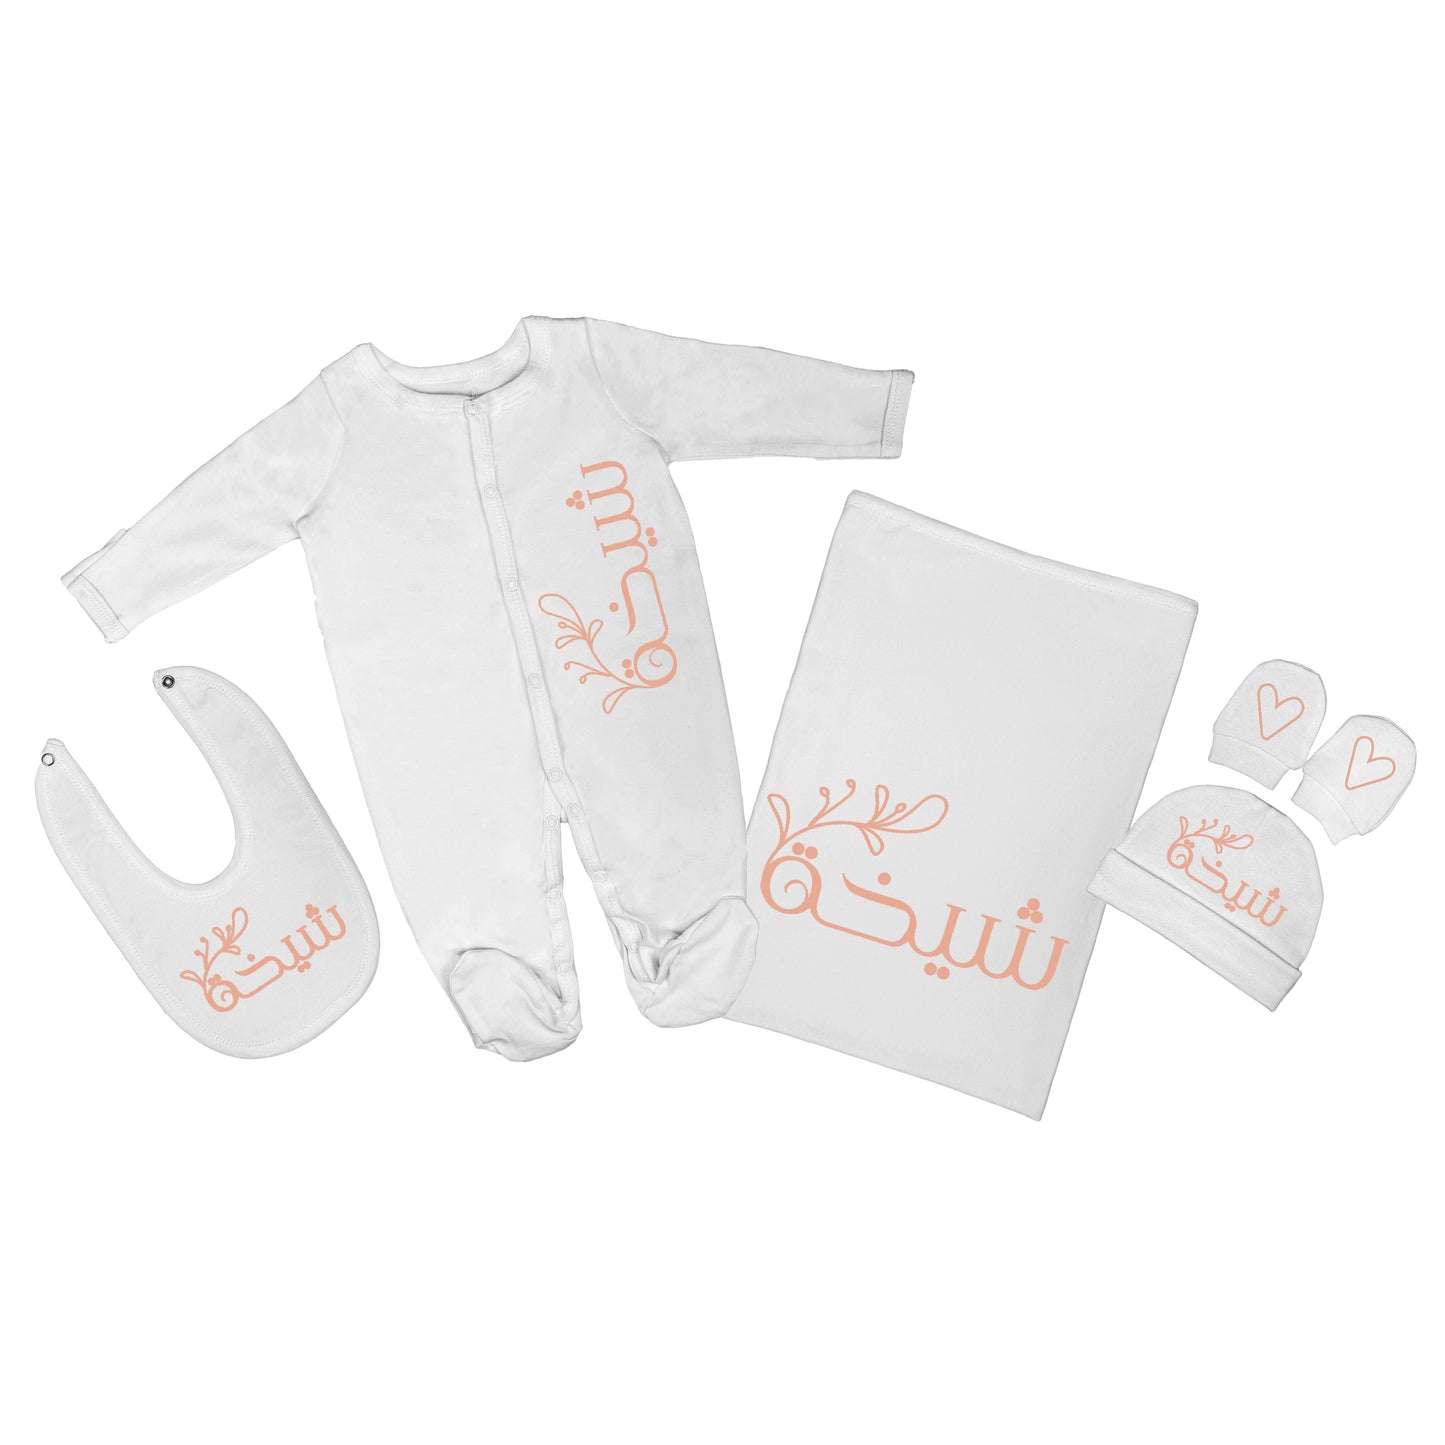 Personalized Baby Clothing Set (Blanket, Sleepsuit, Beanie, Bib, Mittens) - Flower